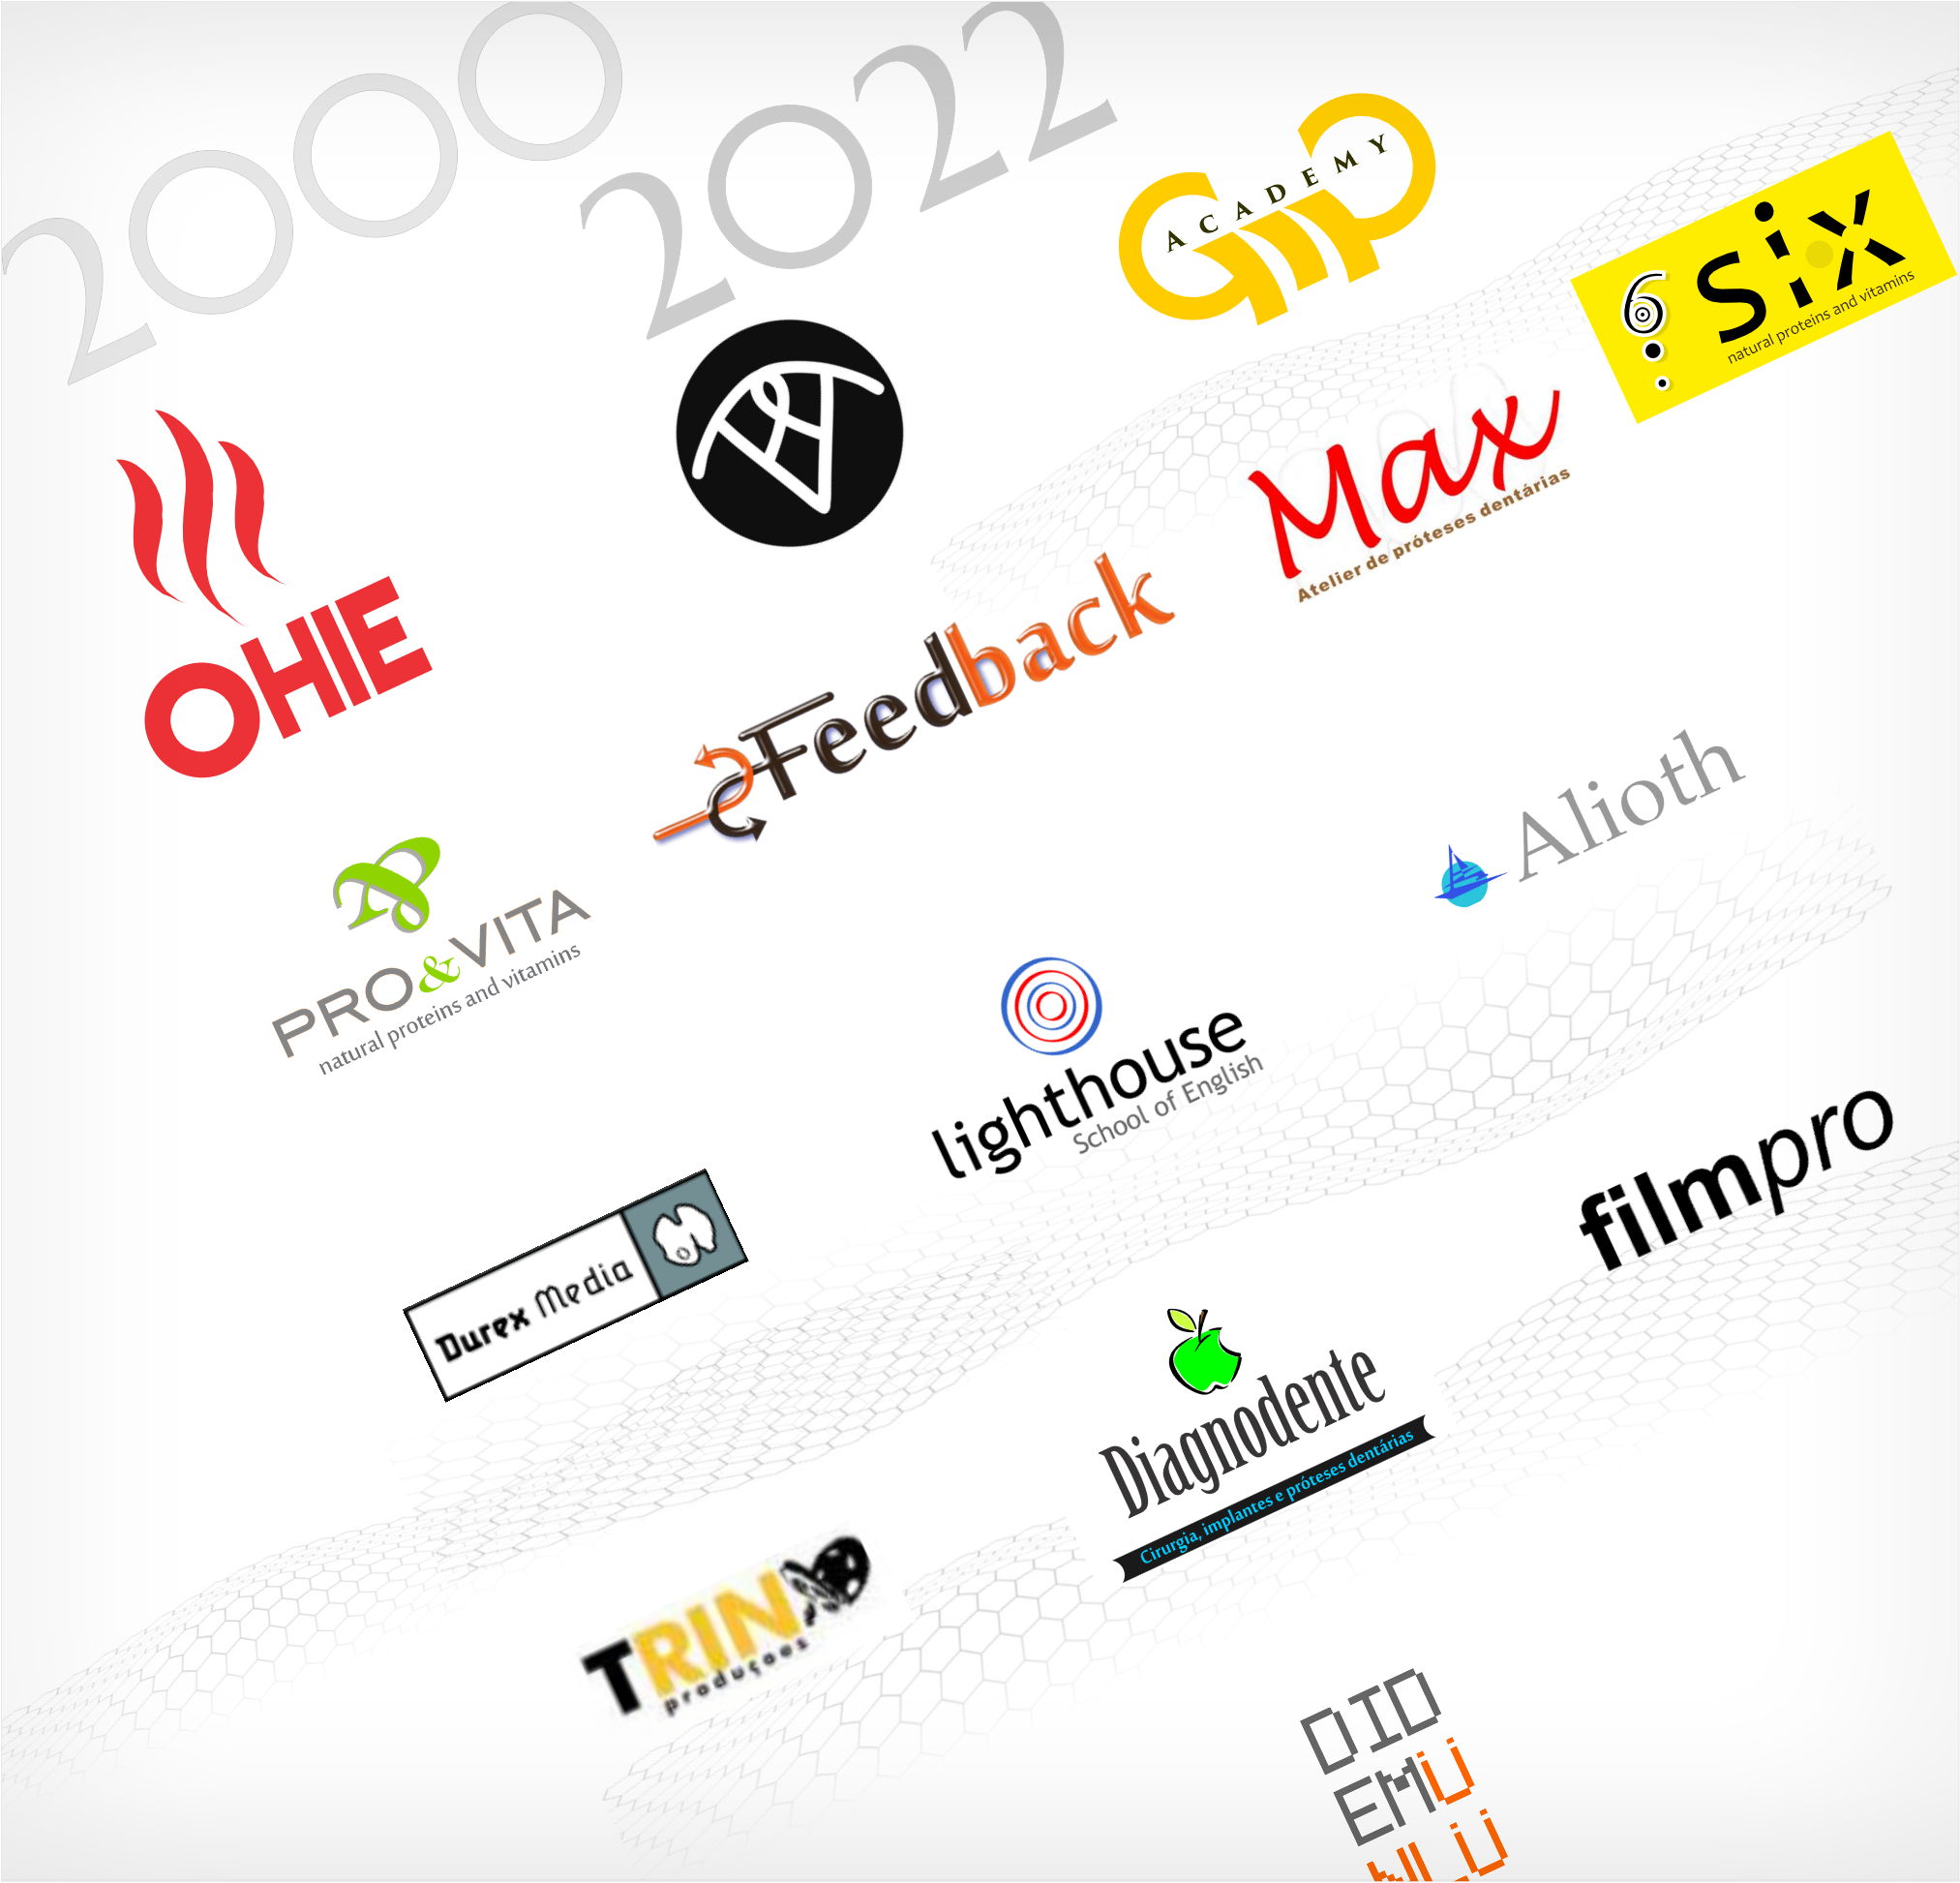 an image showing many logos made by Gian Mario Pintus